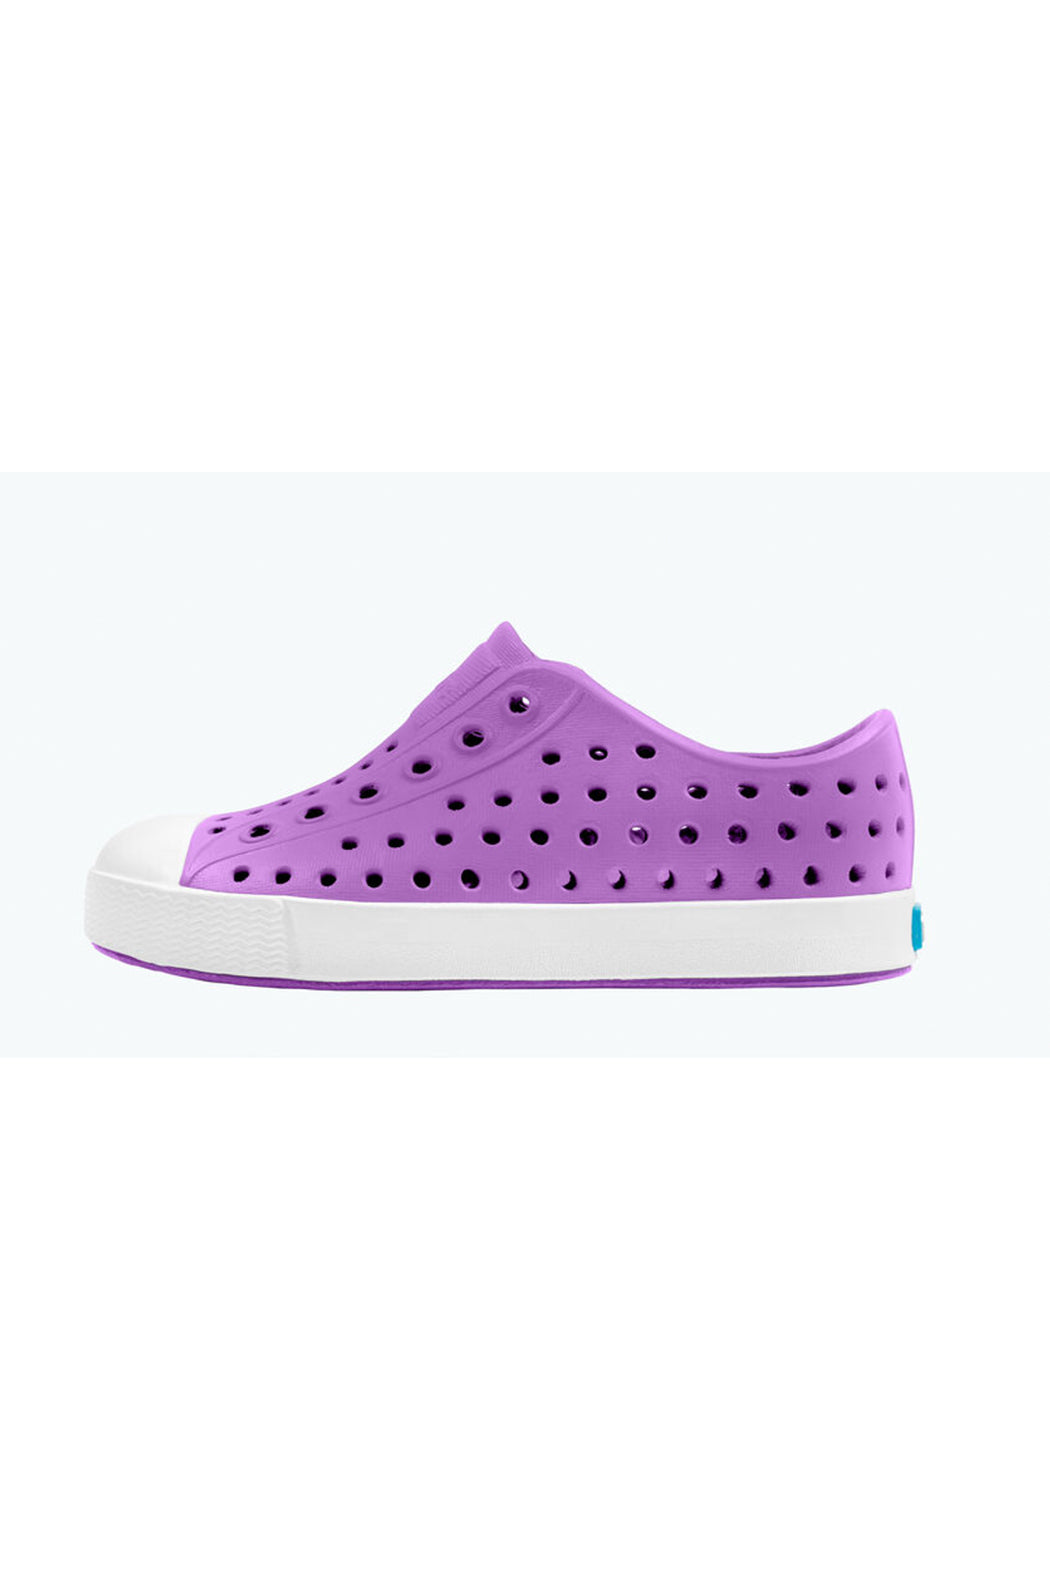 Native Jefferson Big Kid Shoes - Starfish Purple/Shell White